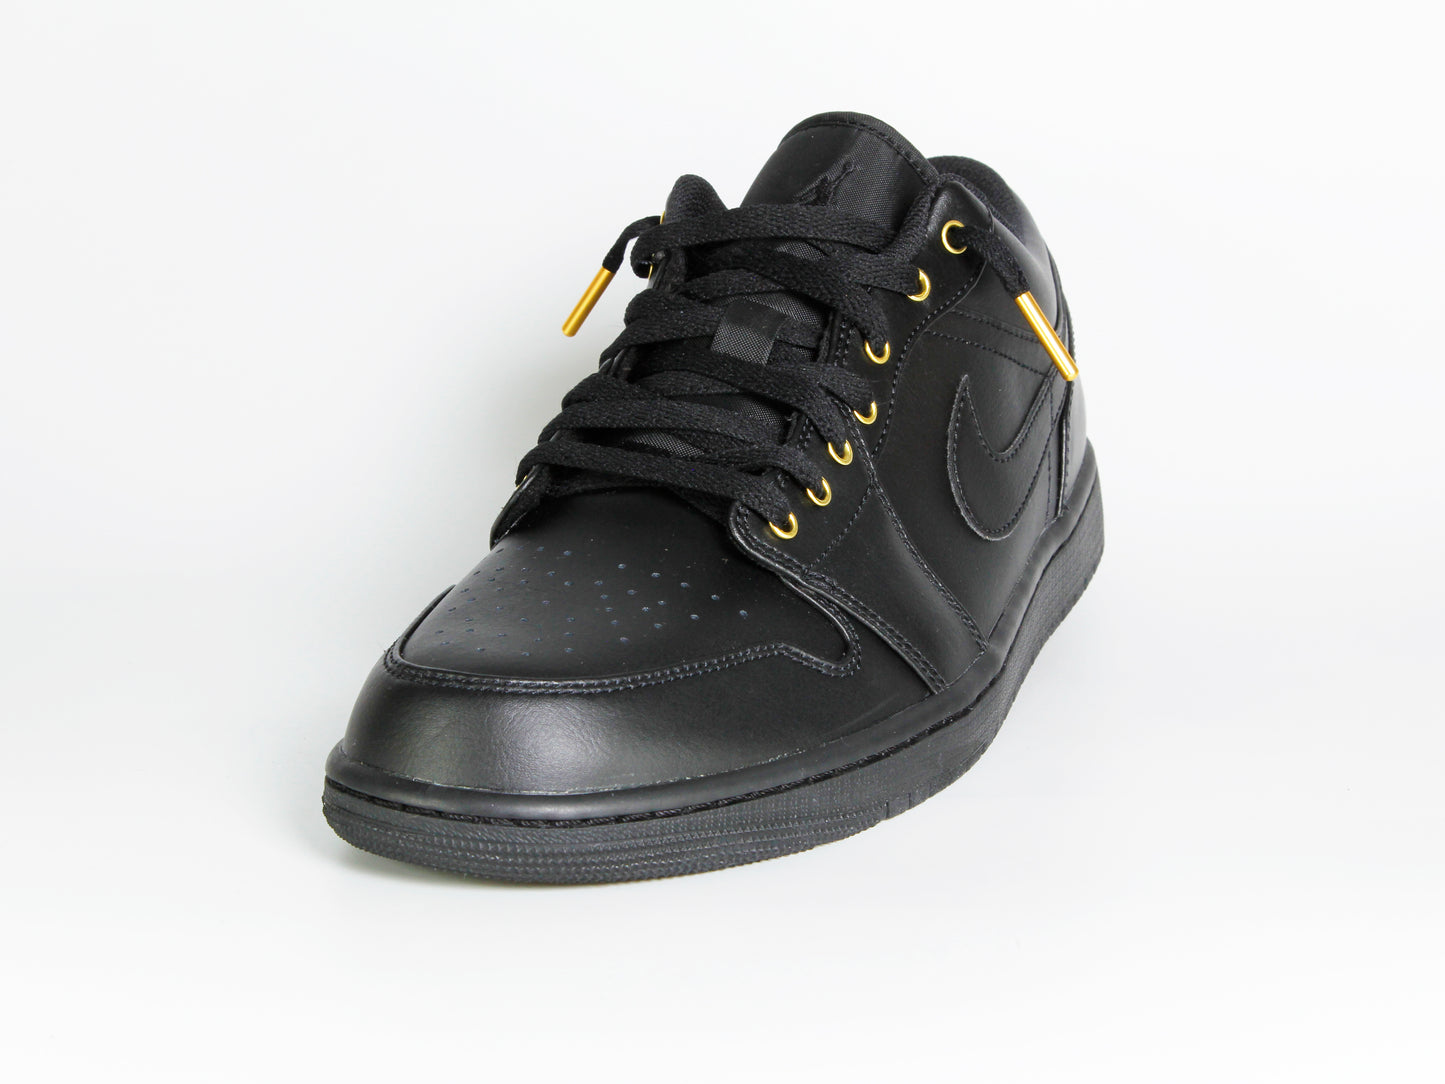 Custom Jordan 1 Low Black w/ Gold Accents